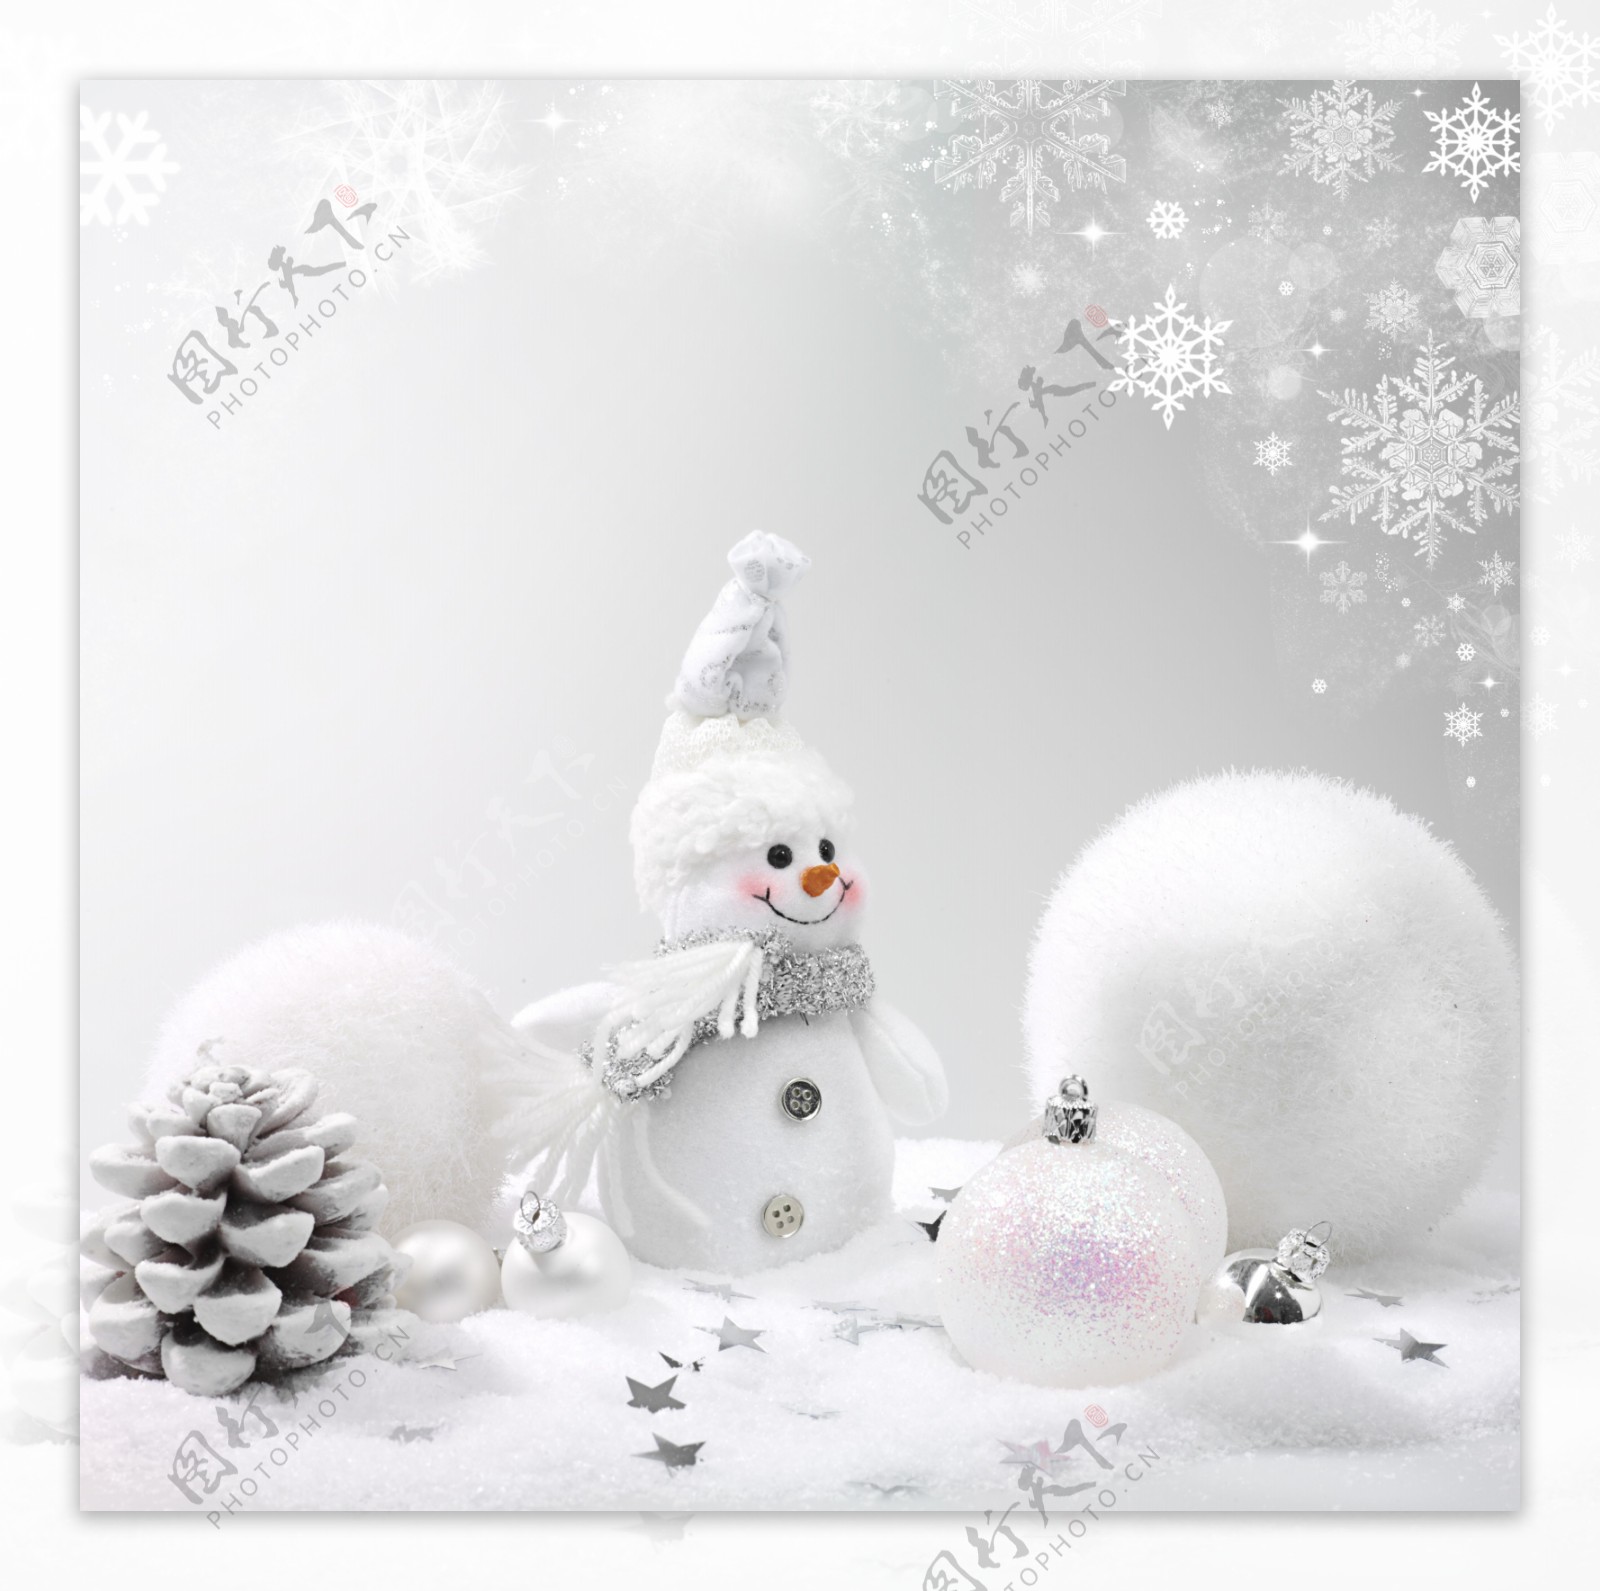 圣诞雪人雪球雪花图片